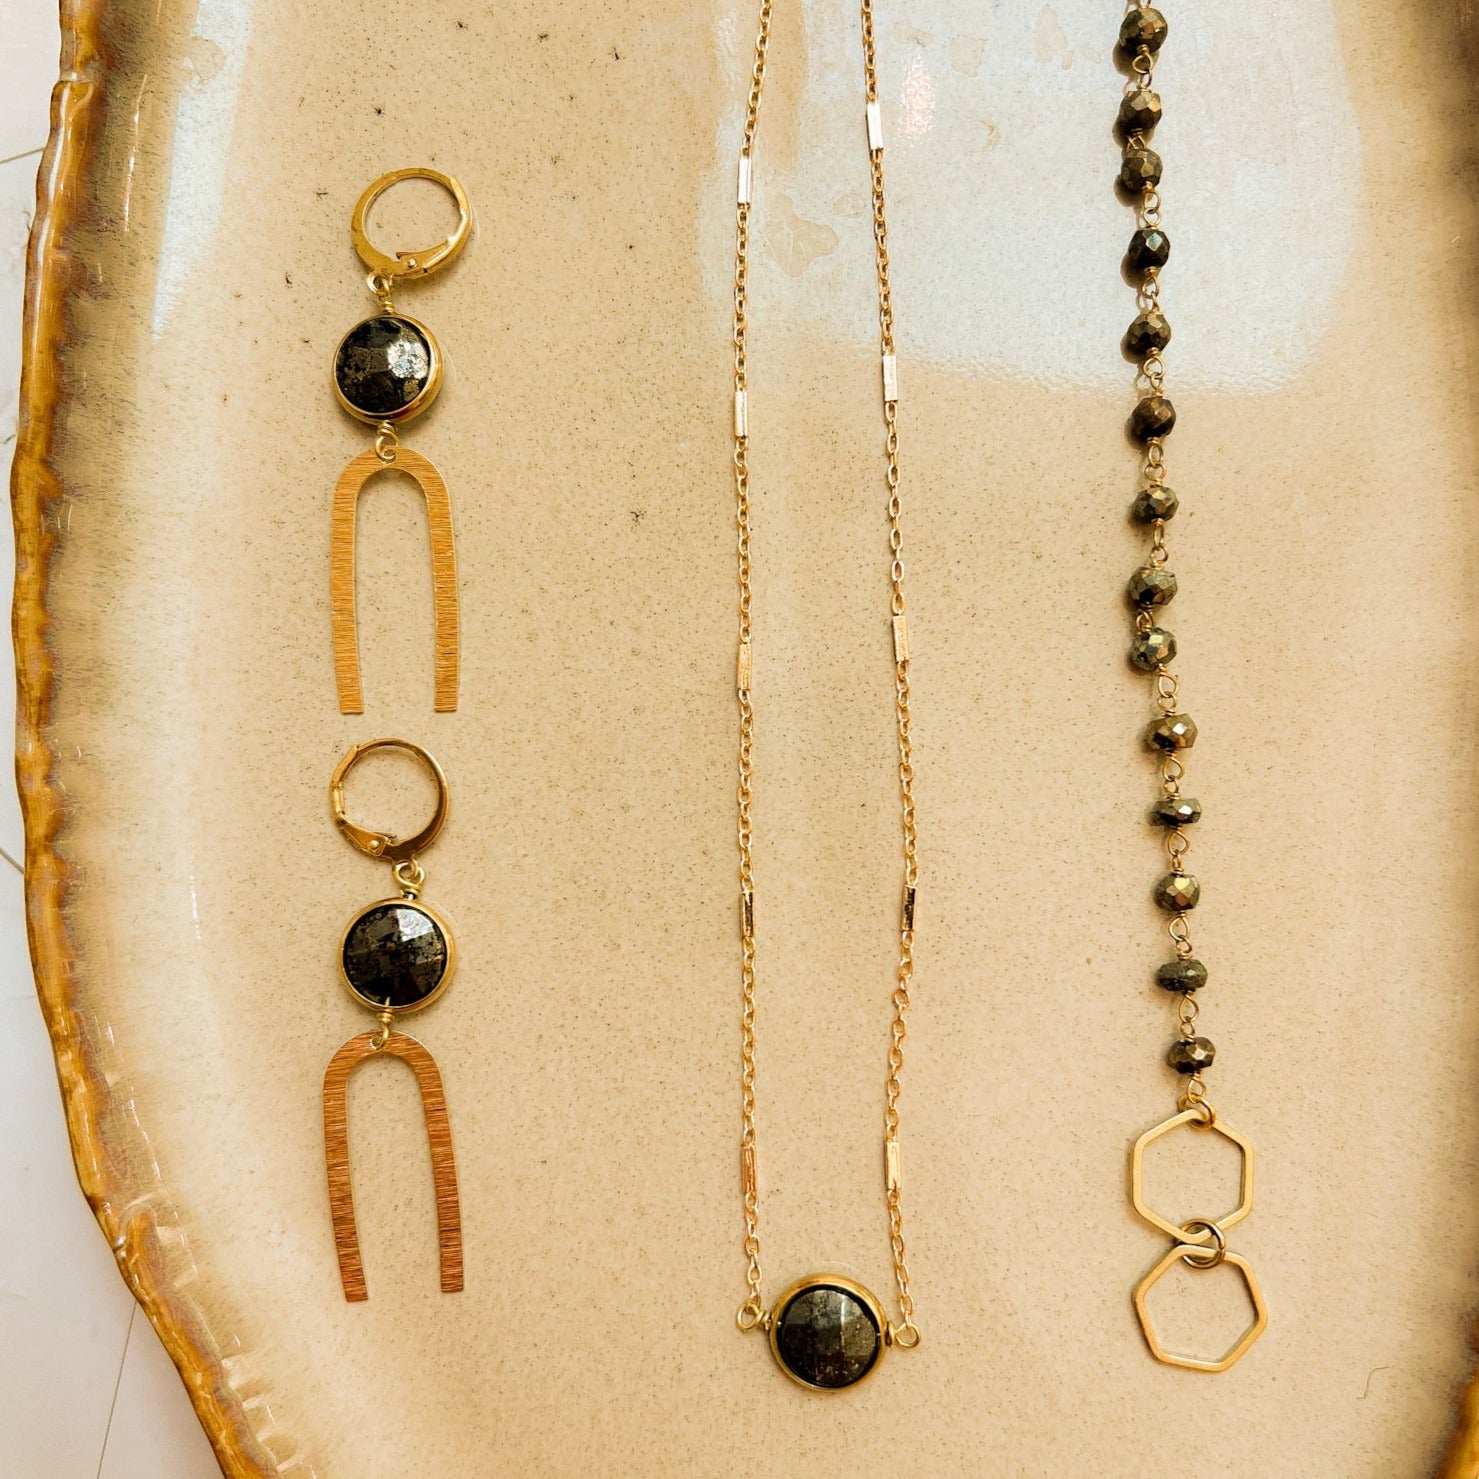 Gemstone Rosary Chain Bracelet - Labradorite or Pyrite